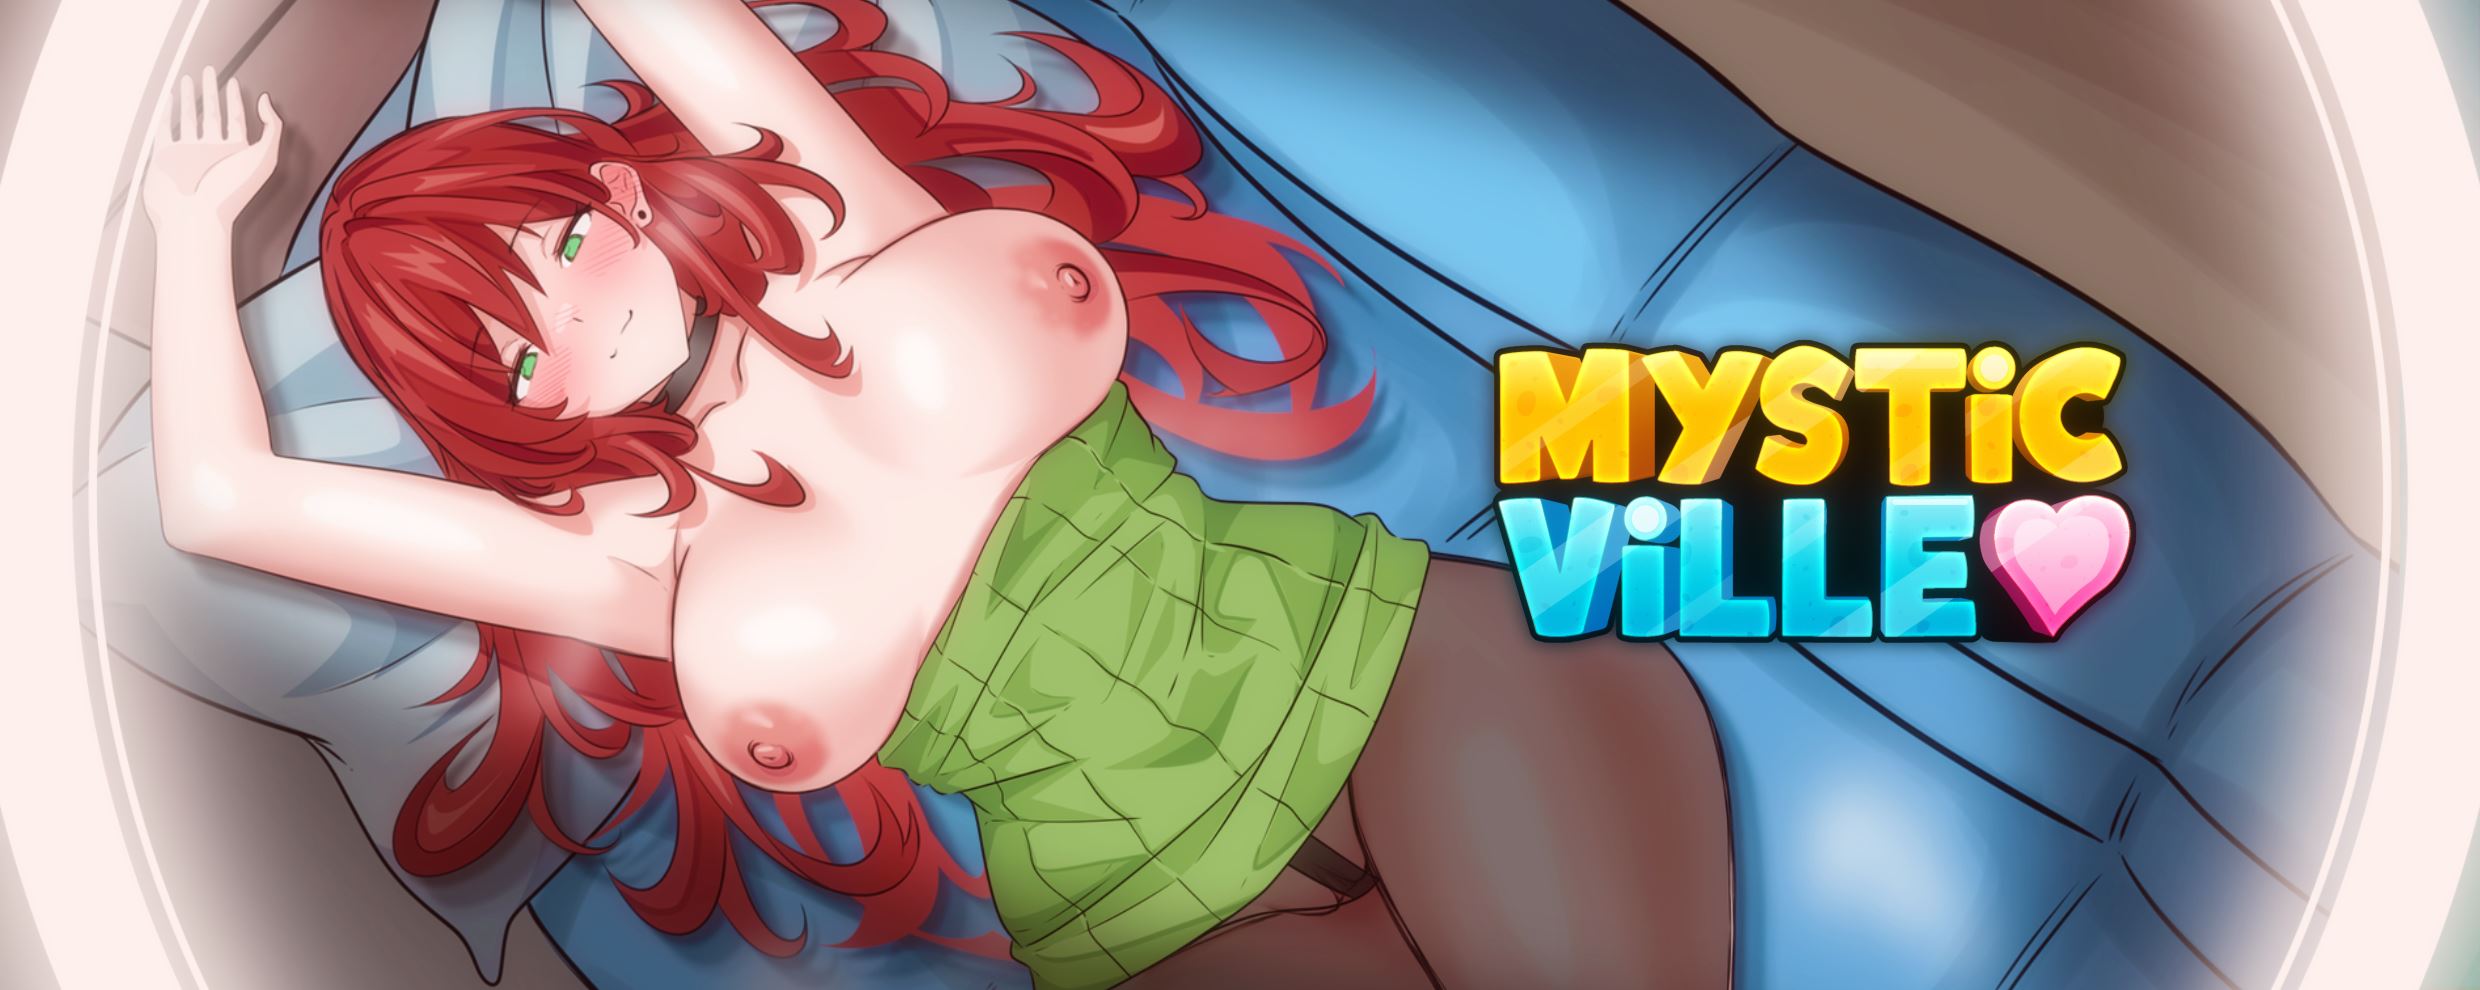 Mystic Ville porn xxx game download cover